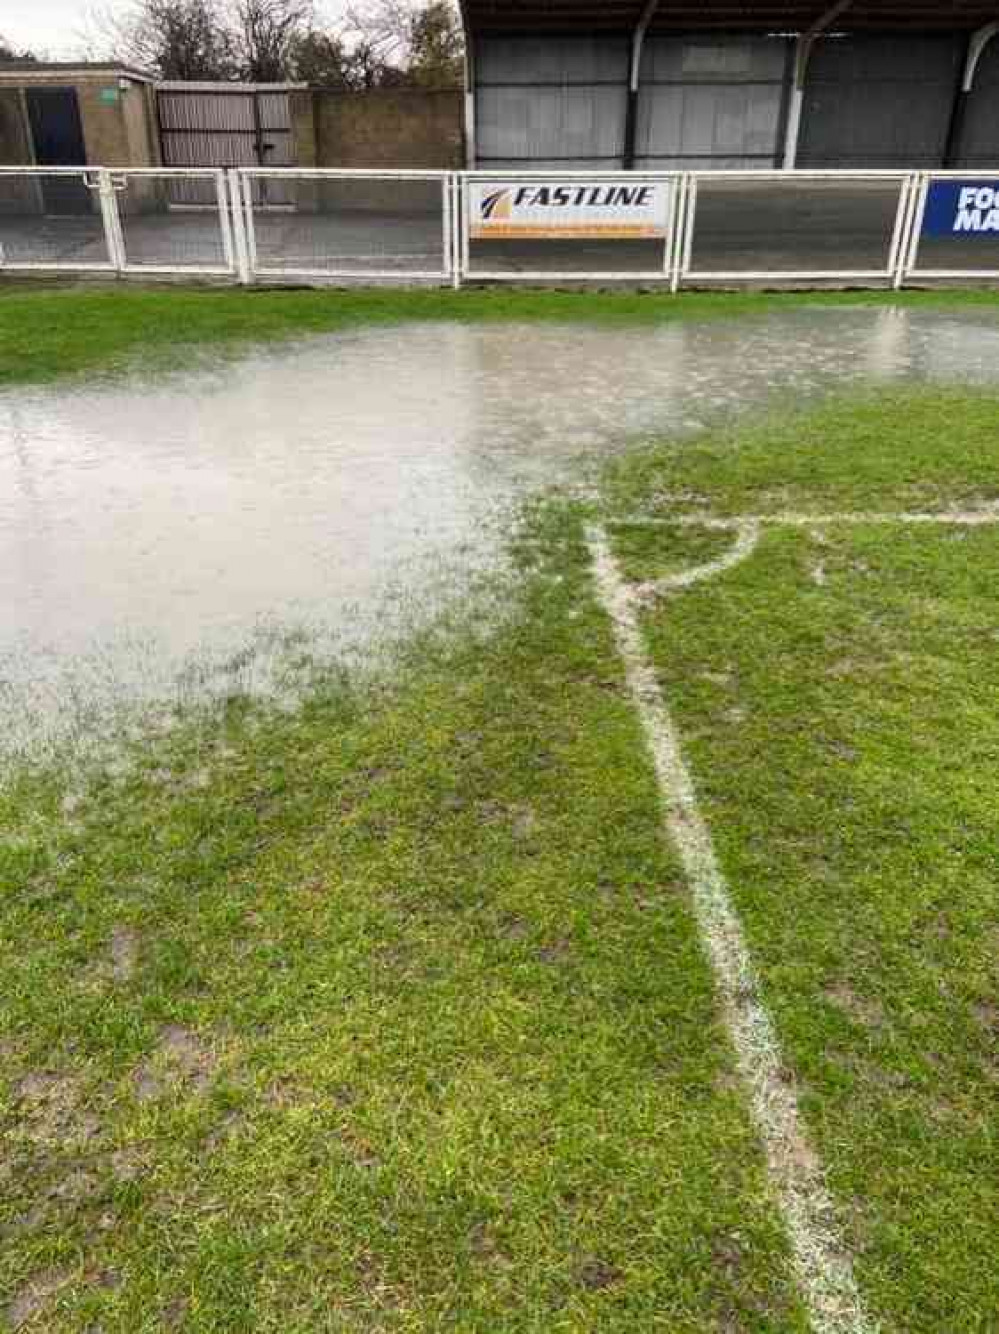 Tilbury's Chadfields pitch yesterday